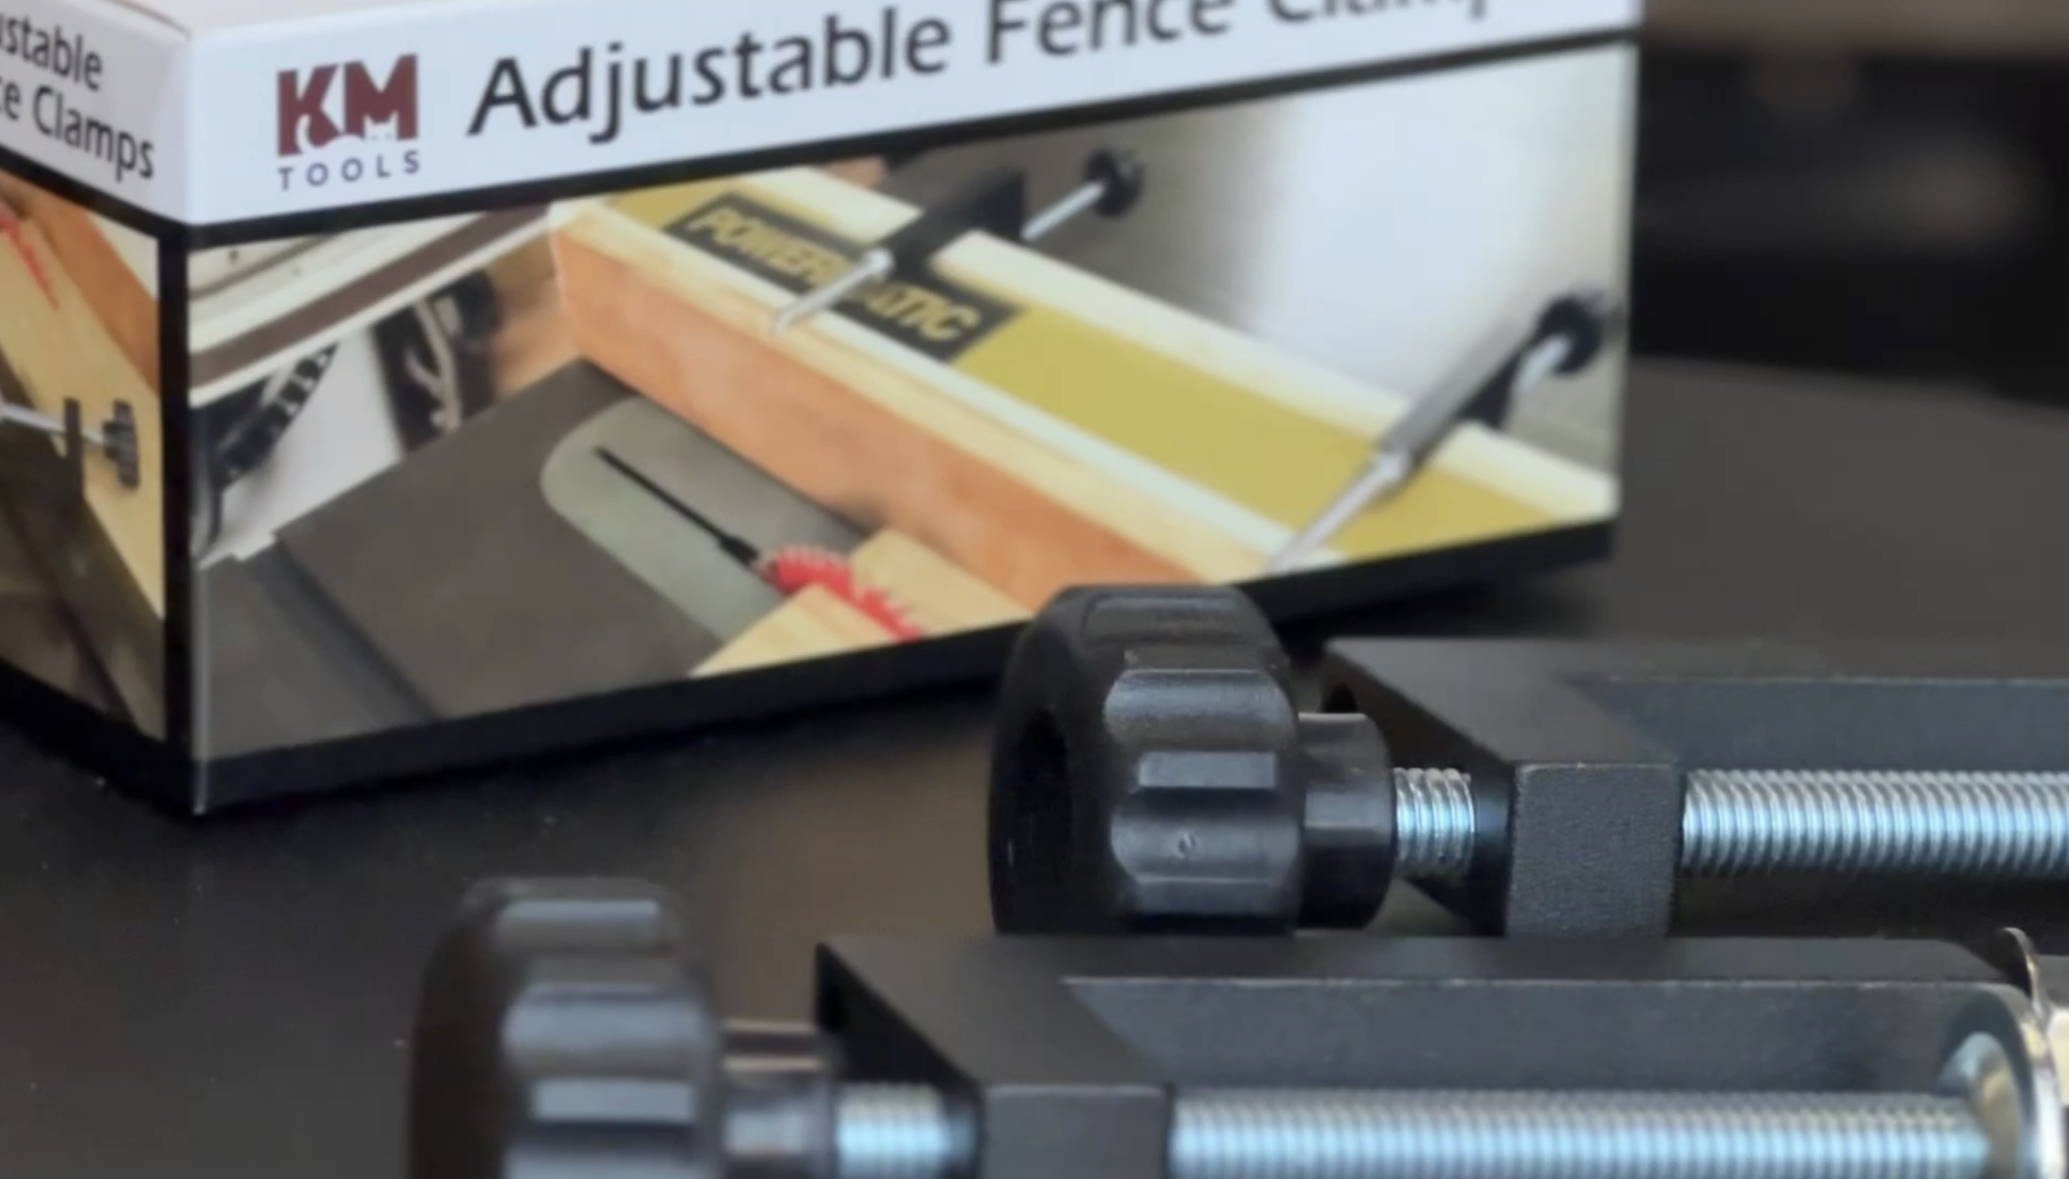 katz-moses tools adjustable fence clamps